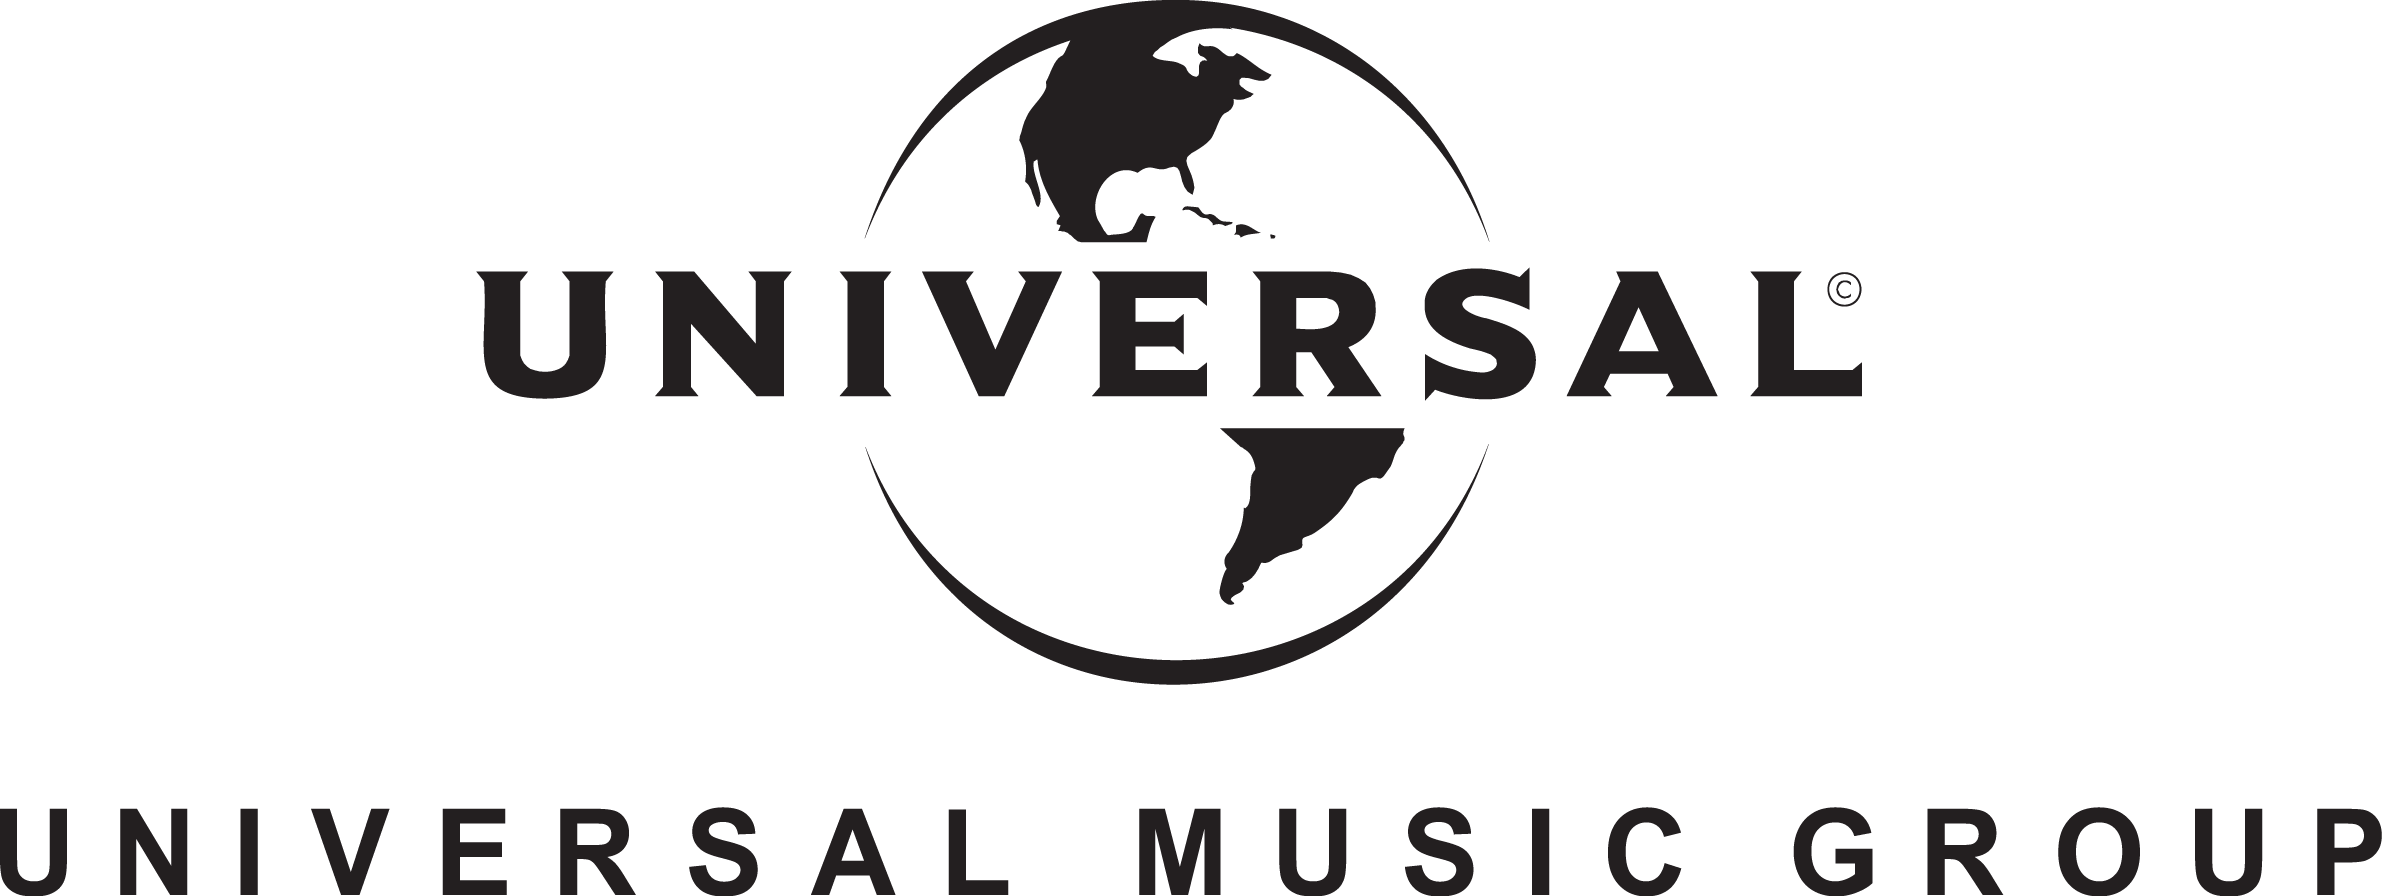 UNIVERSAL_MUSIC_GROUP-copy1